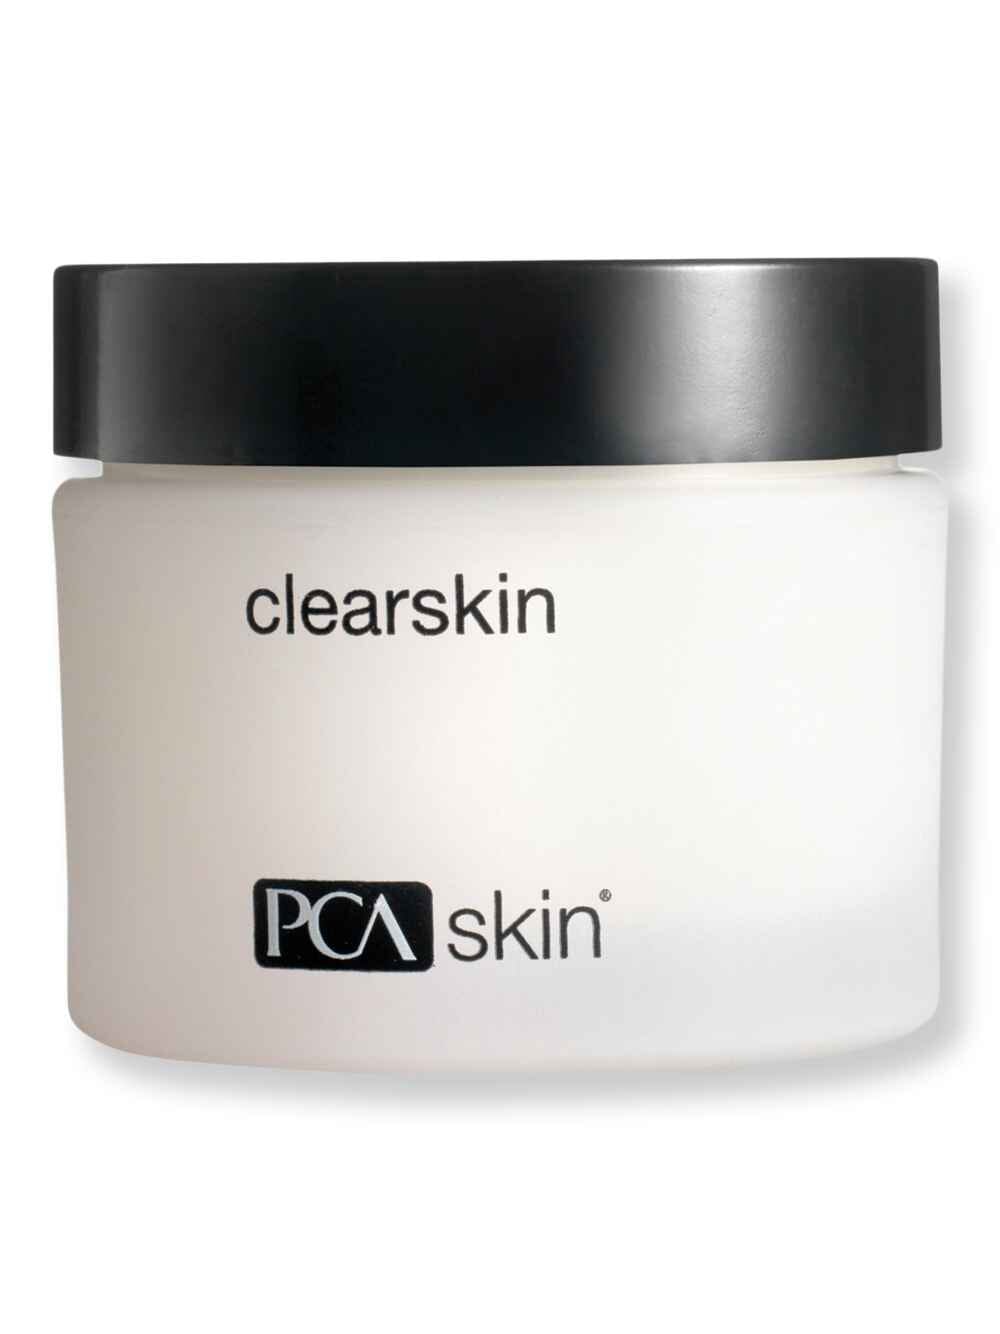 PCA Skin PCA Skin Clearskin 1.7 oz50 ml Face Moisturizers 